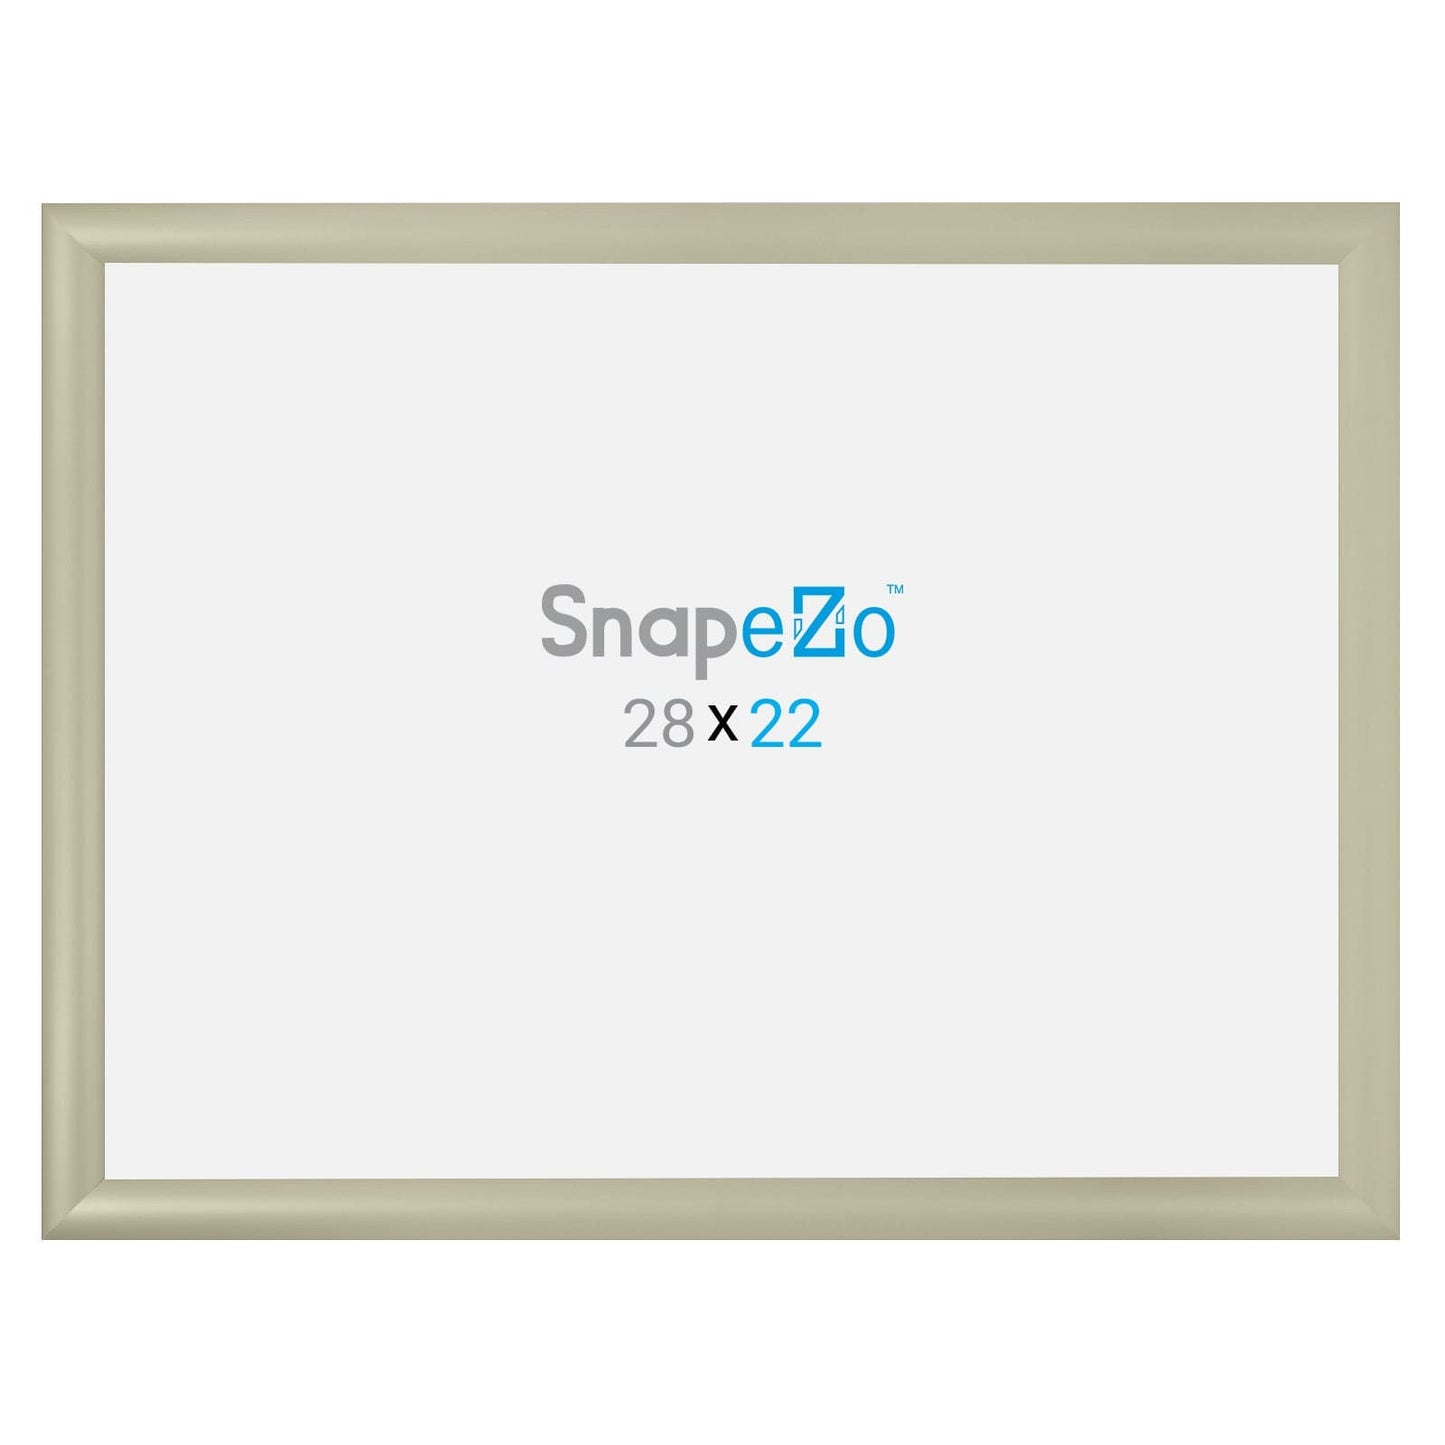 22x28 Cream SnapeZo® Snap Frame - 1.2" Profile - Snap Frames Direct